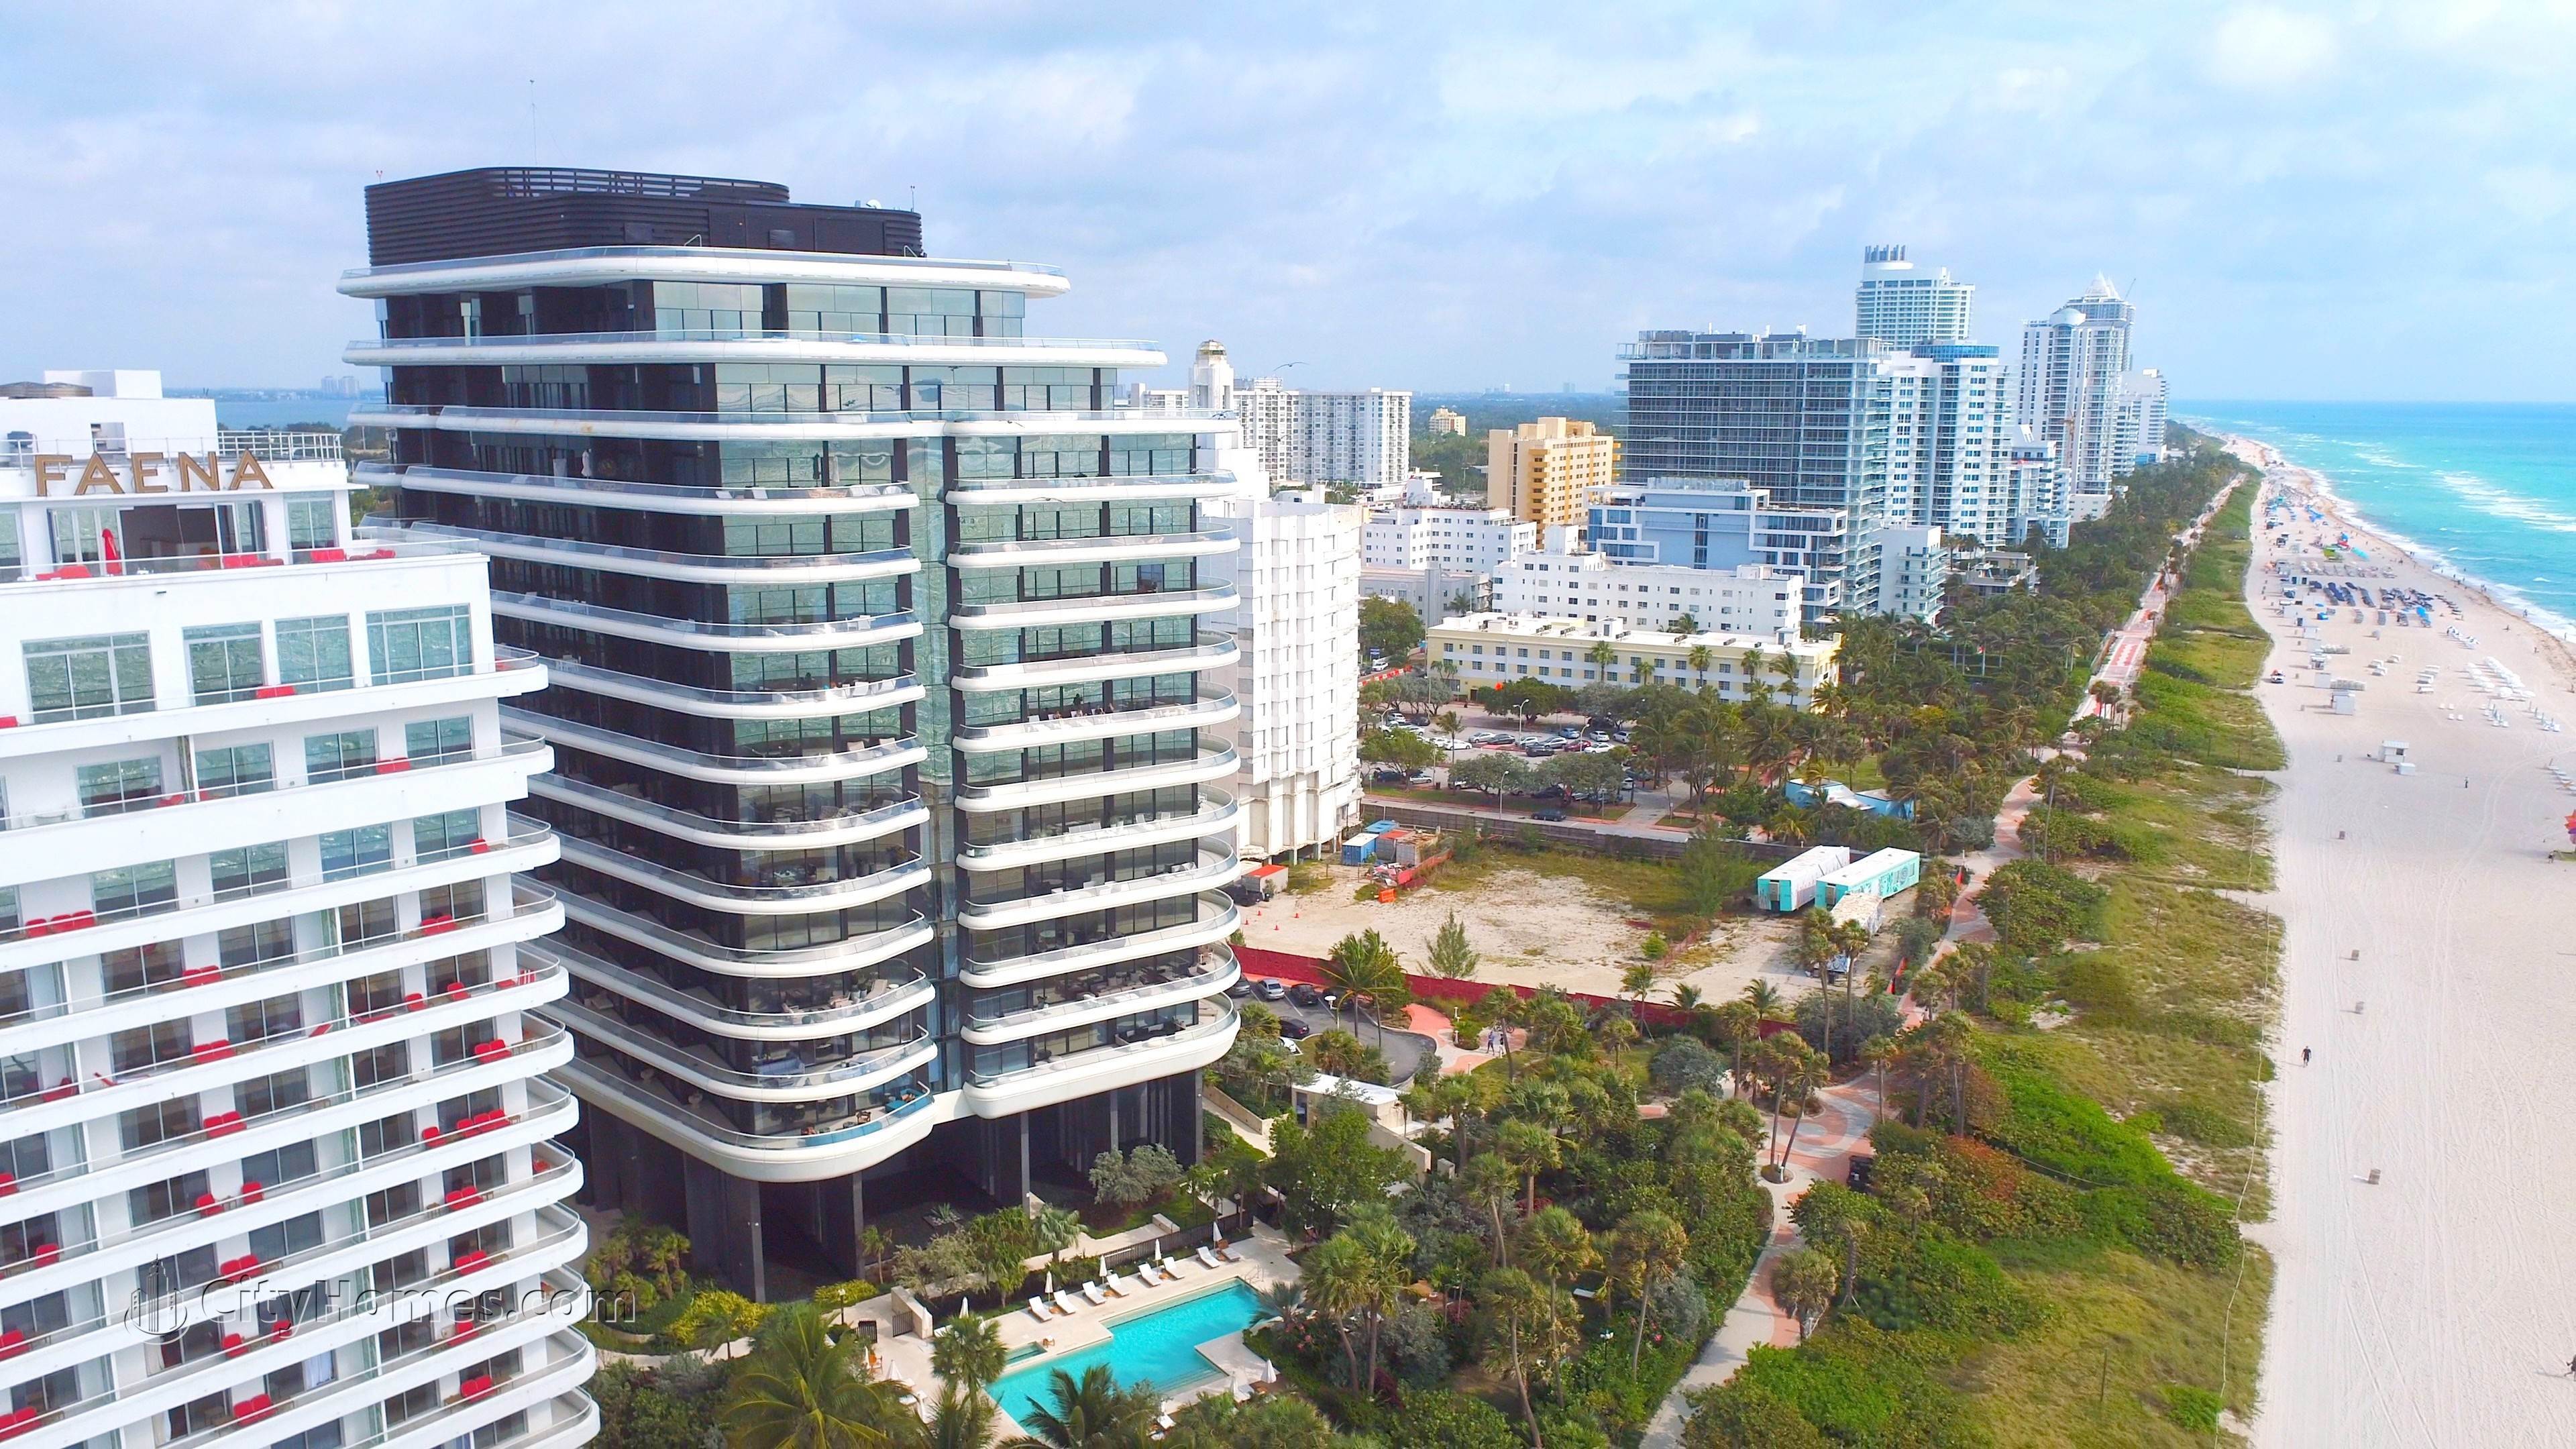 FAENA HOUSE MIAMI BEACH edificio en 3315 Collins Avenue, Mid Beach, Miami Beach, FL 33140